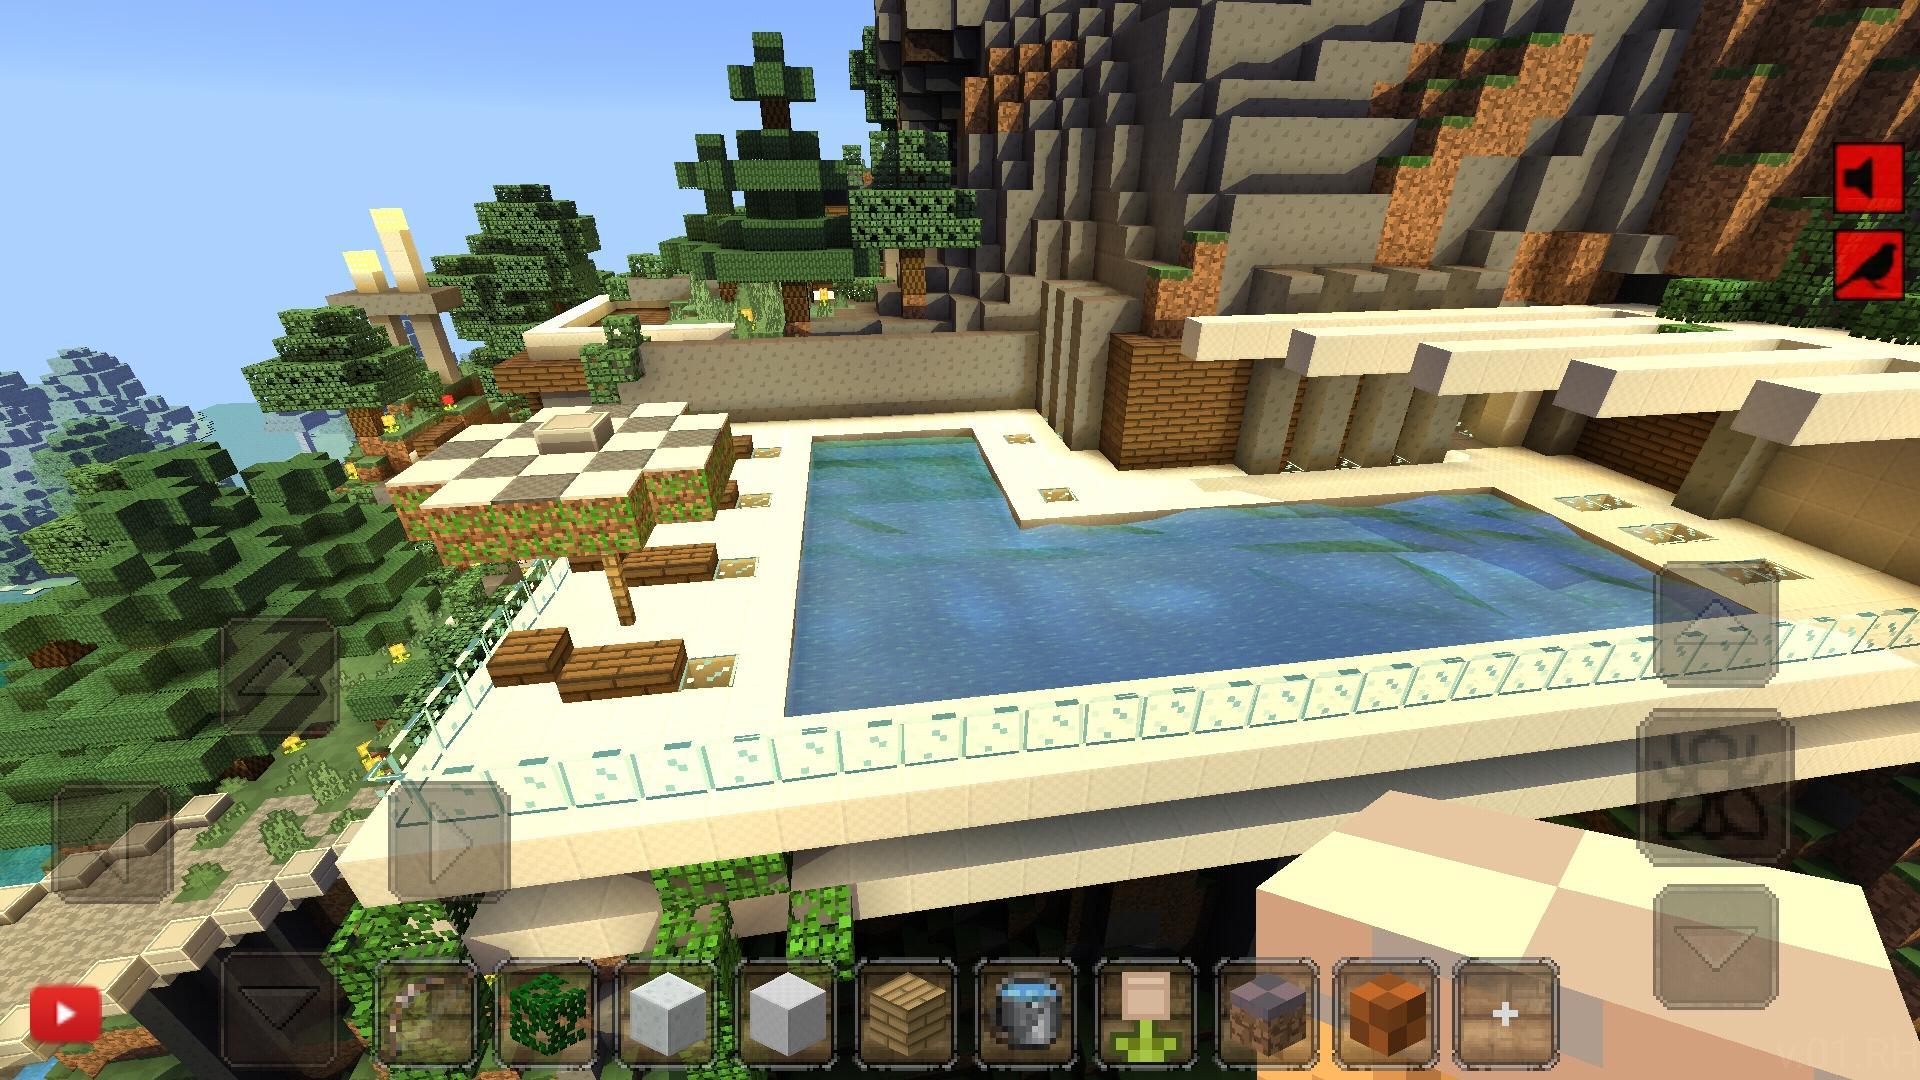 Minecraft World of Warcraft building. New craft 2